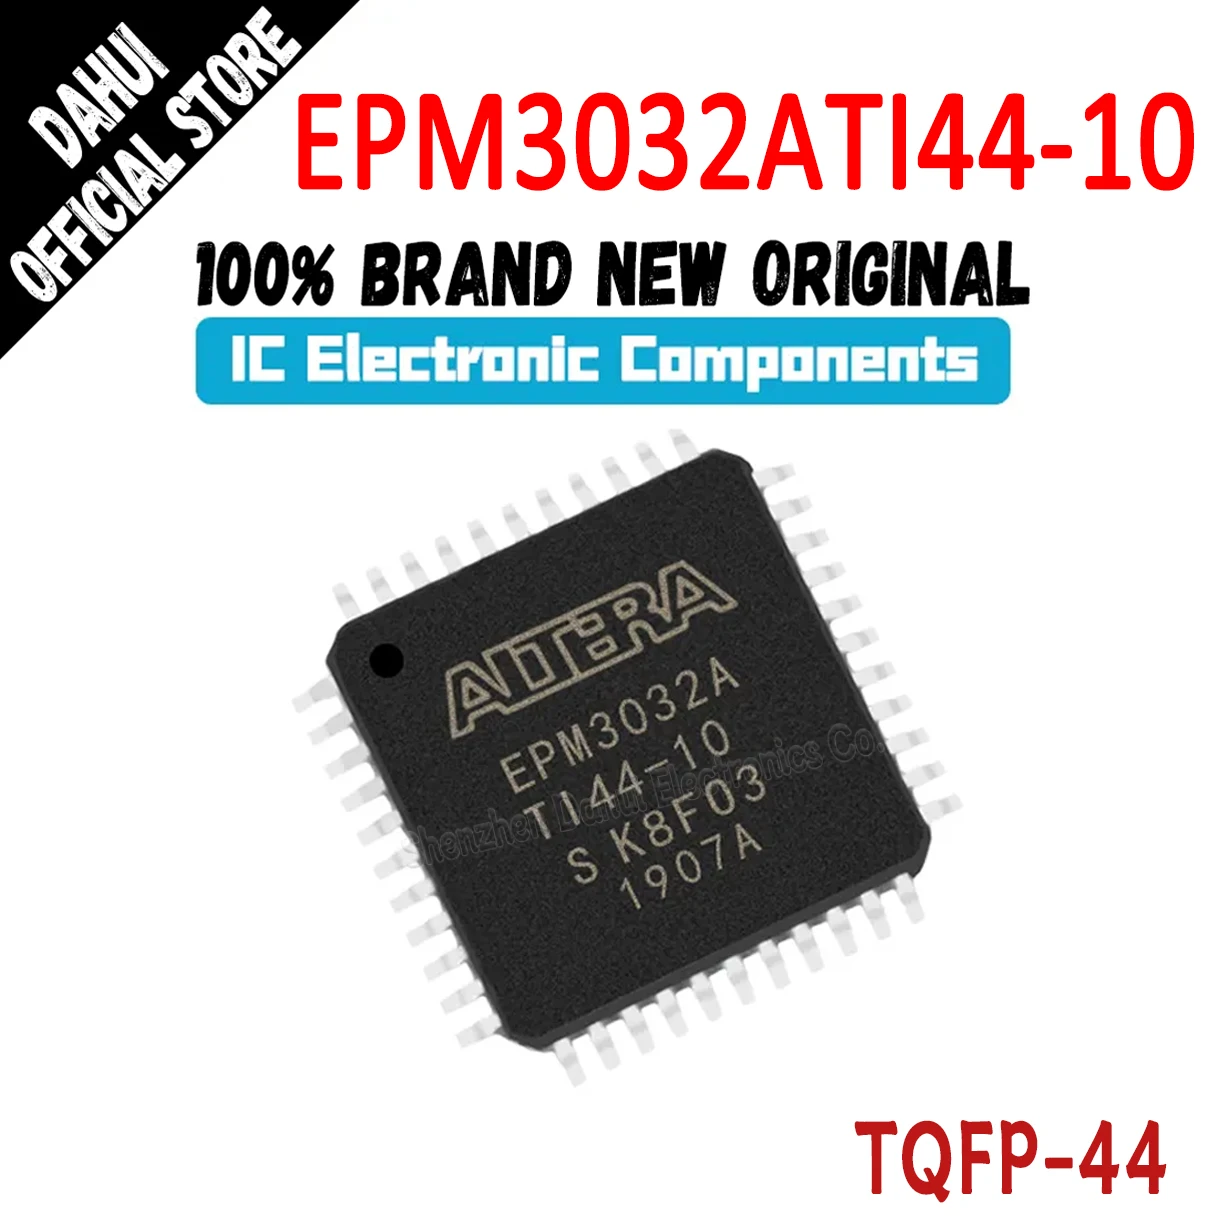 EPM3032ATI44-10 EPM3032ATI44 EPM3032ATI EPM3032 микросхема EPM IC CPLD FPGA TQFP-44 В наличии 100% Абсолютно Новый Originl Изображение 0